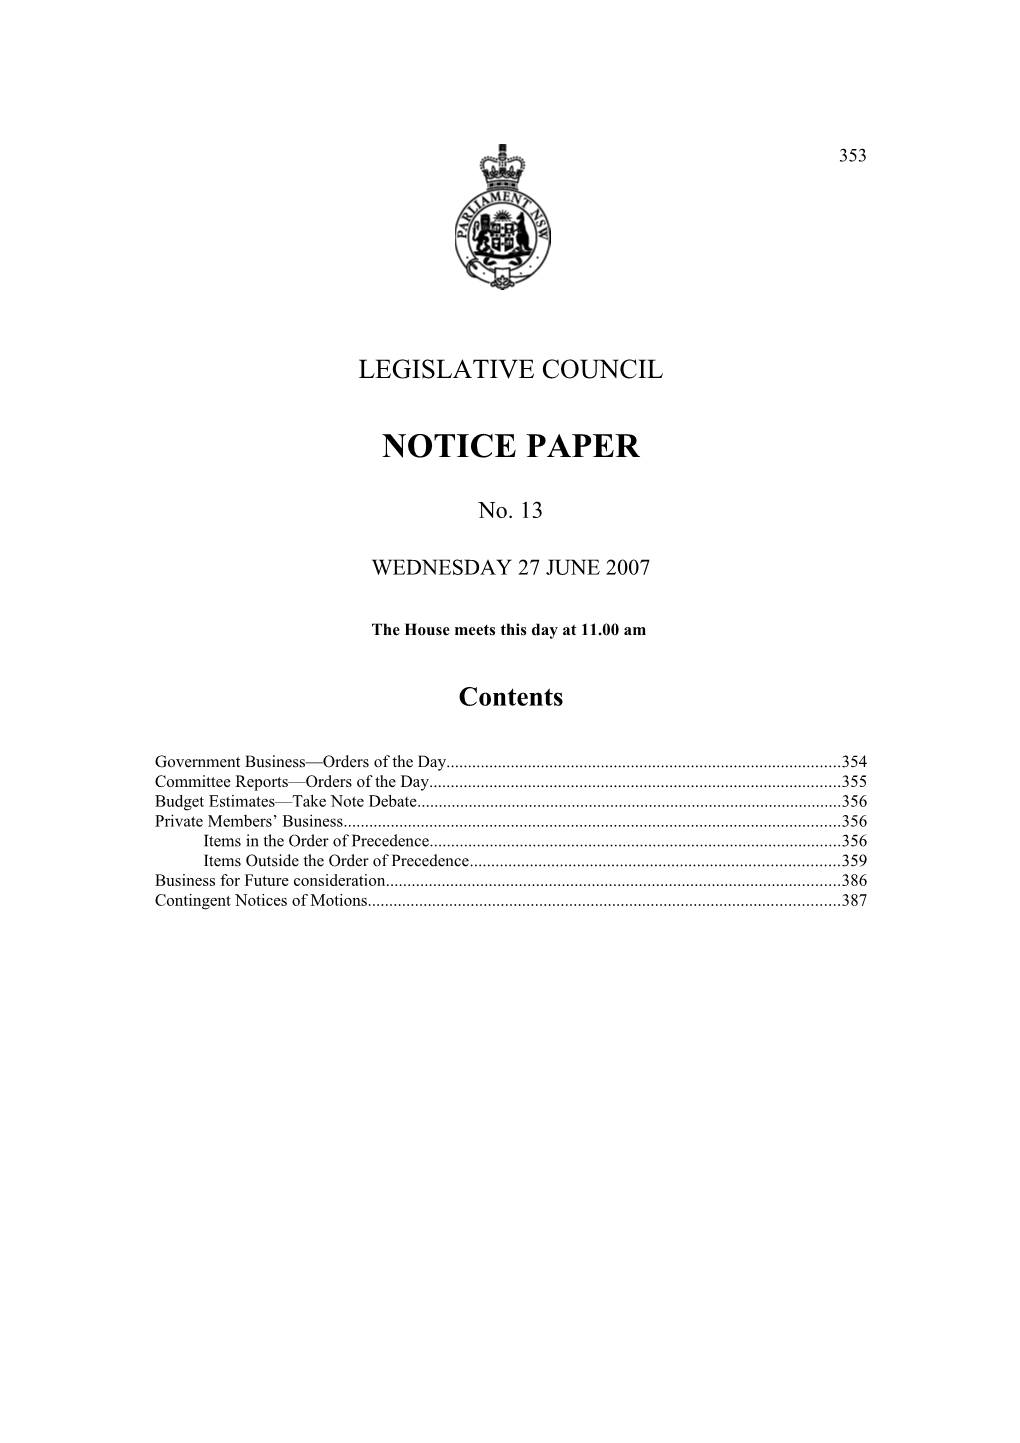 Legislative Council Notice Paper No. 13 Wednesday 27 June 2007